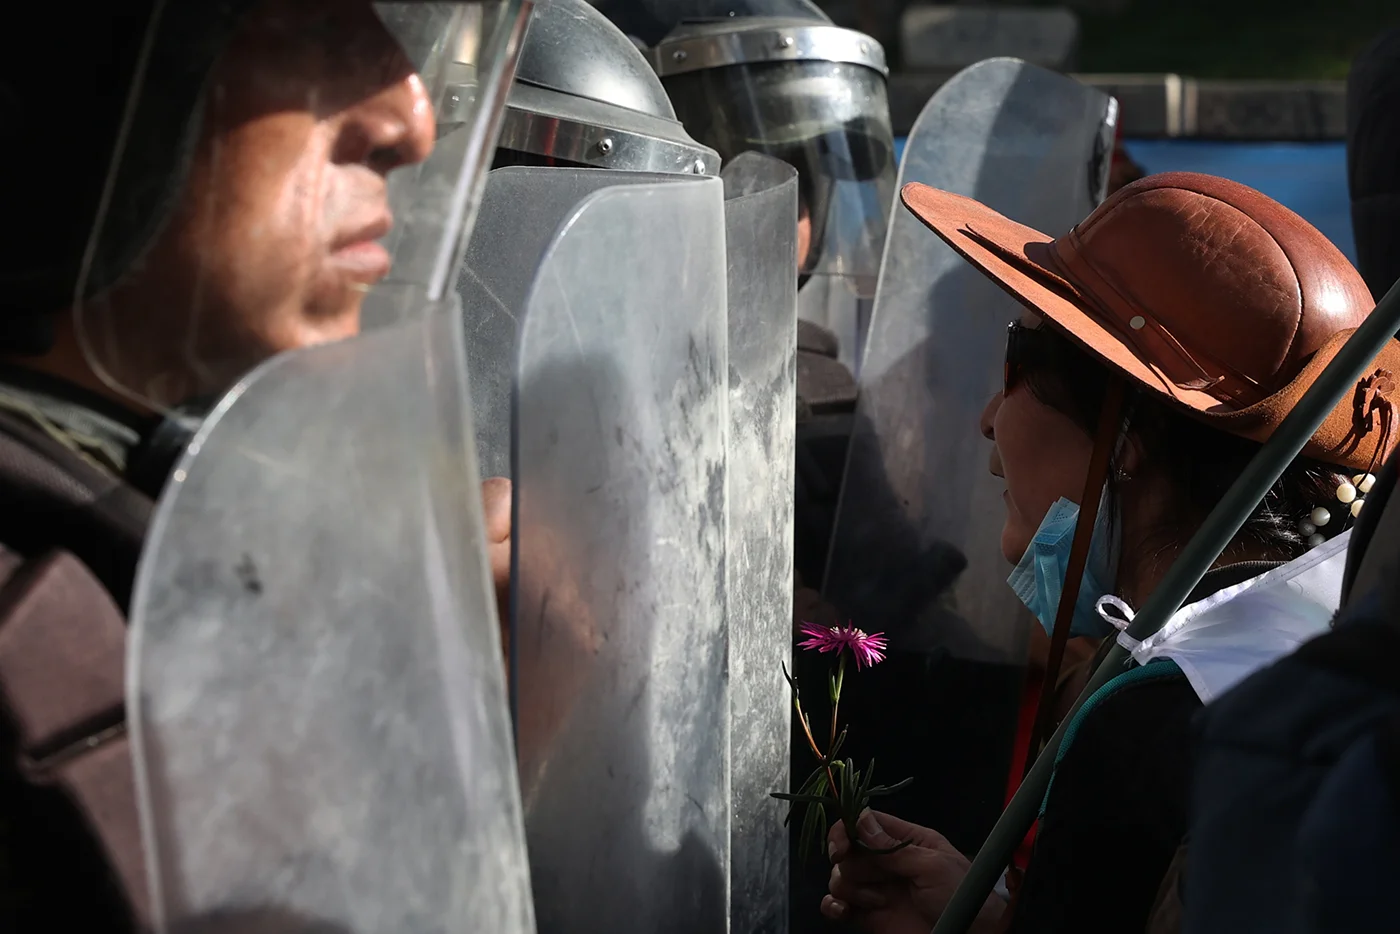 Акции протеста учителей в Ла-Пасе. Фотогалерея